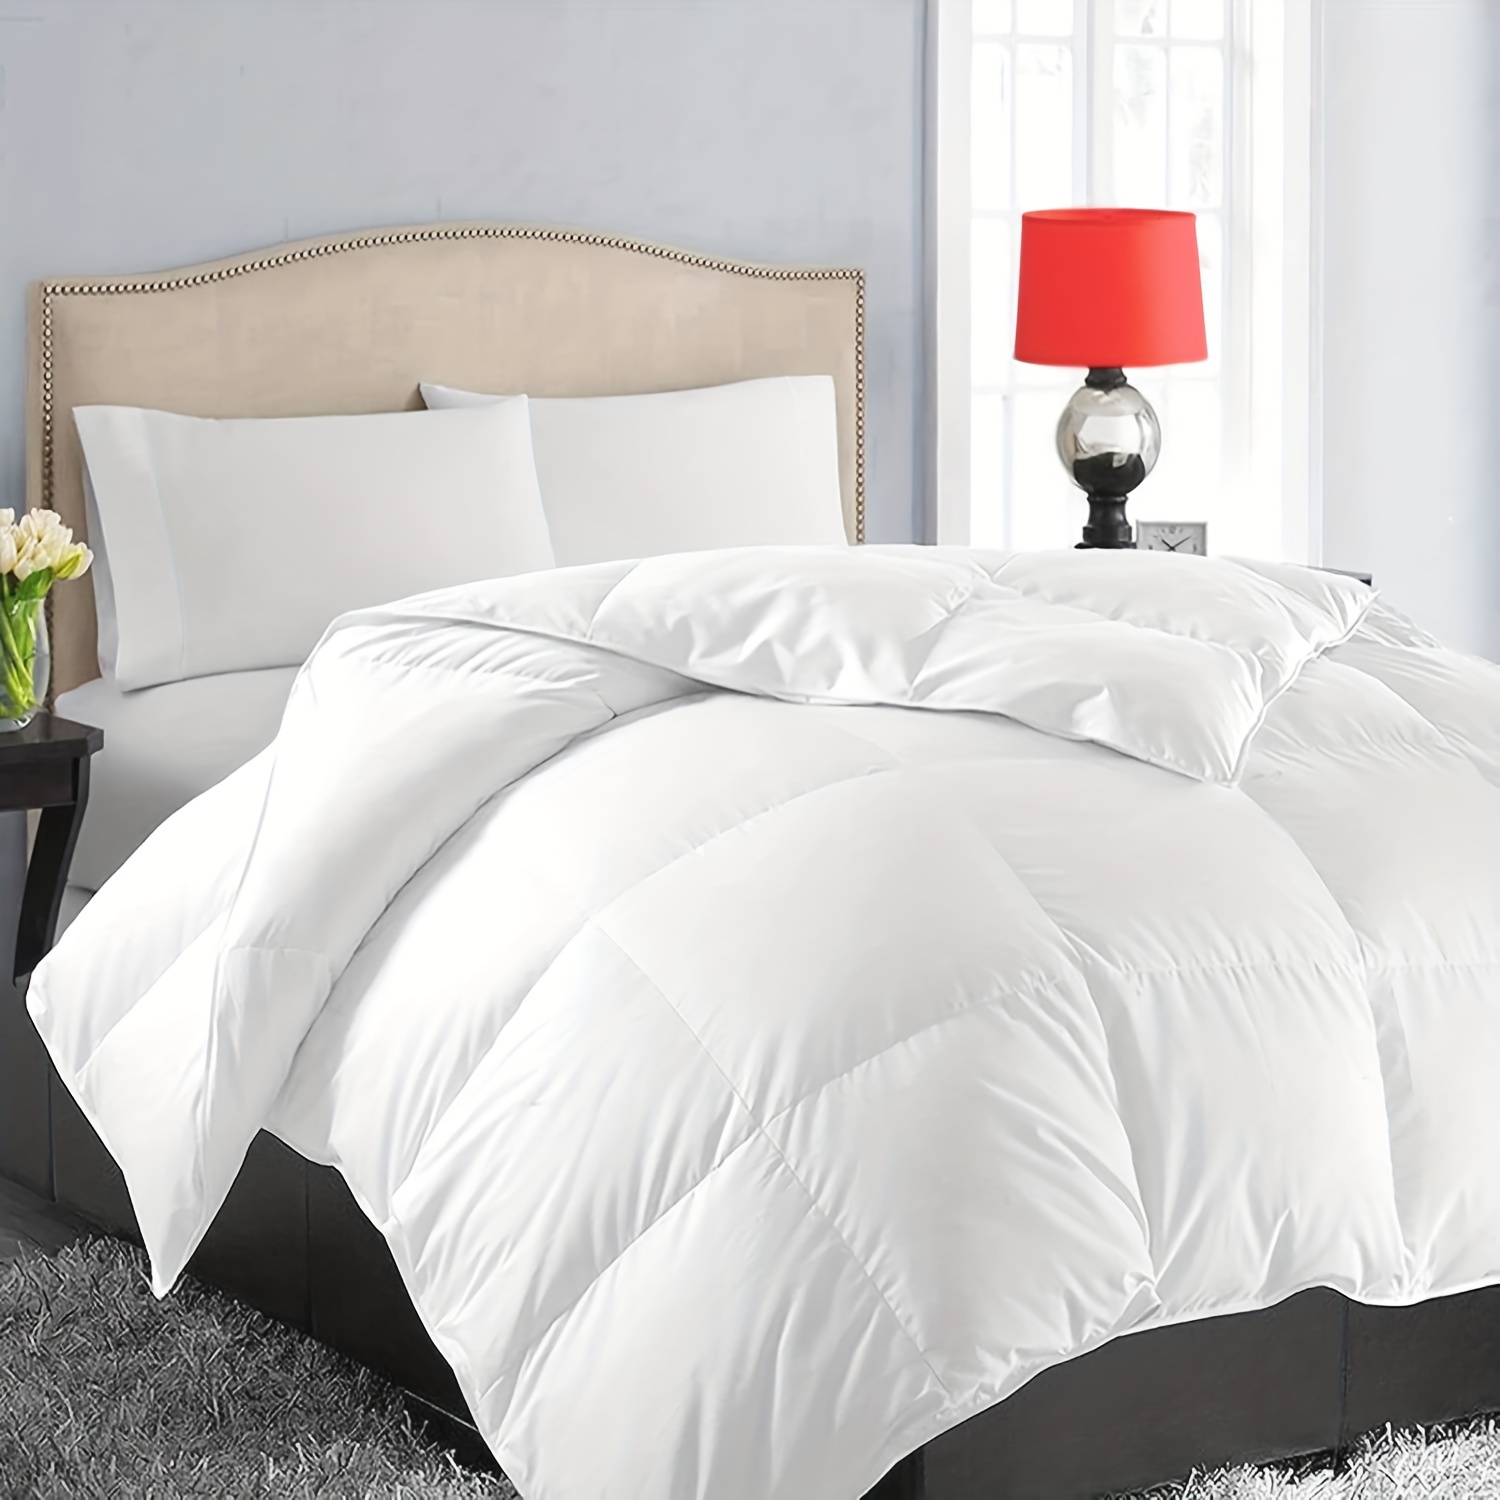 Utopia Bedding comforter Duvet Insert - Quilted comforter with corner Tabs  - Box Stitched Down Alternative comforter (Twin, Beig